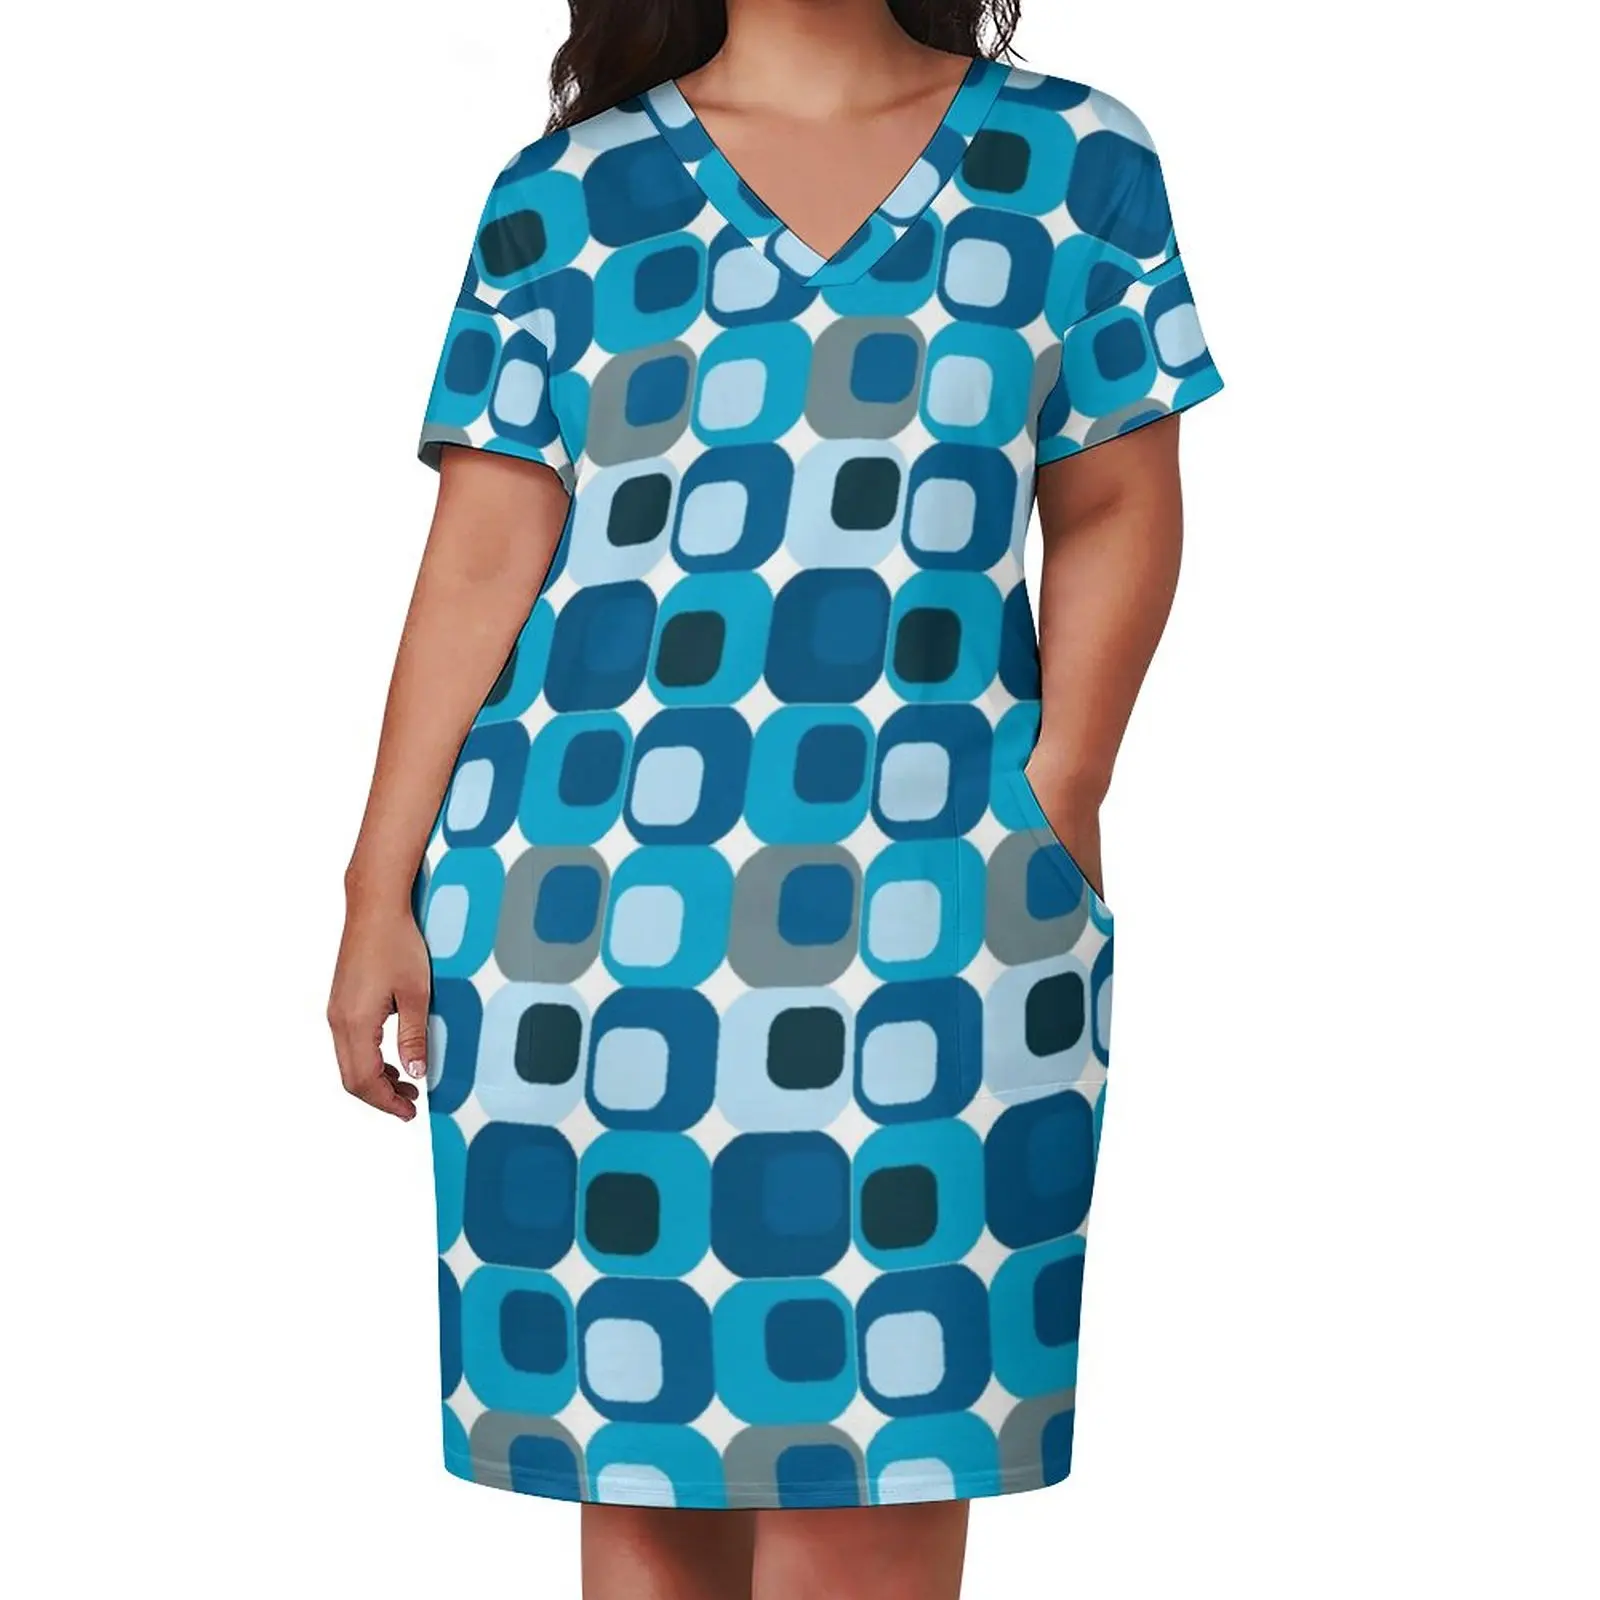 Retro Mod Square Casual Dress Summer Blue Abstract Print Stylish Dresses Female V Neck Graphic Street Wear Dress Plus Size